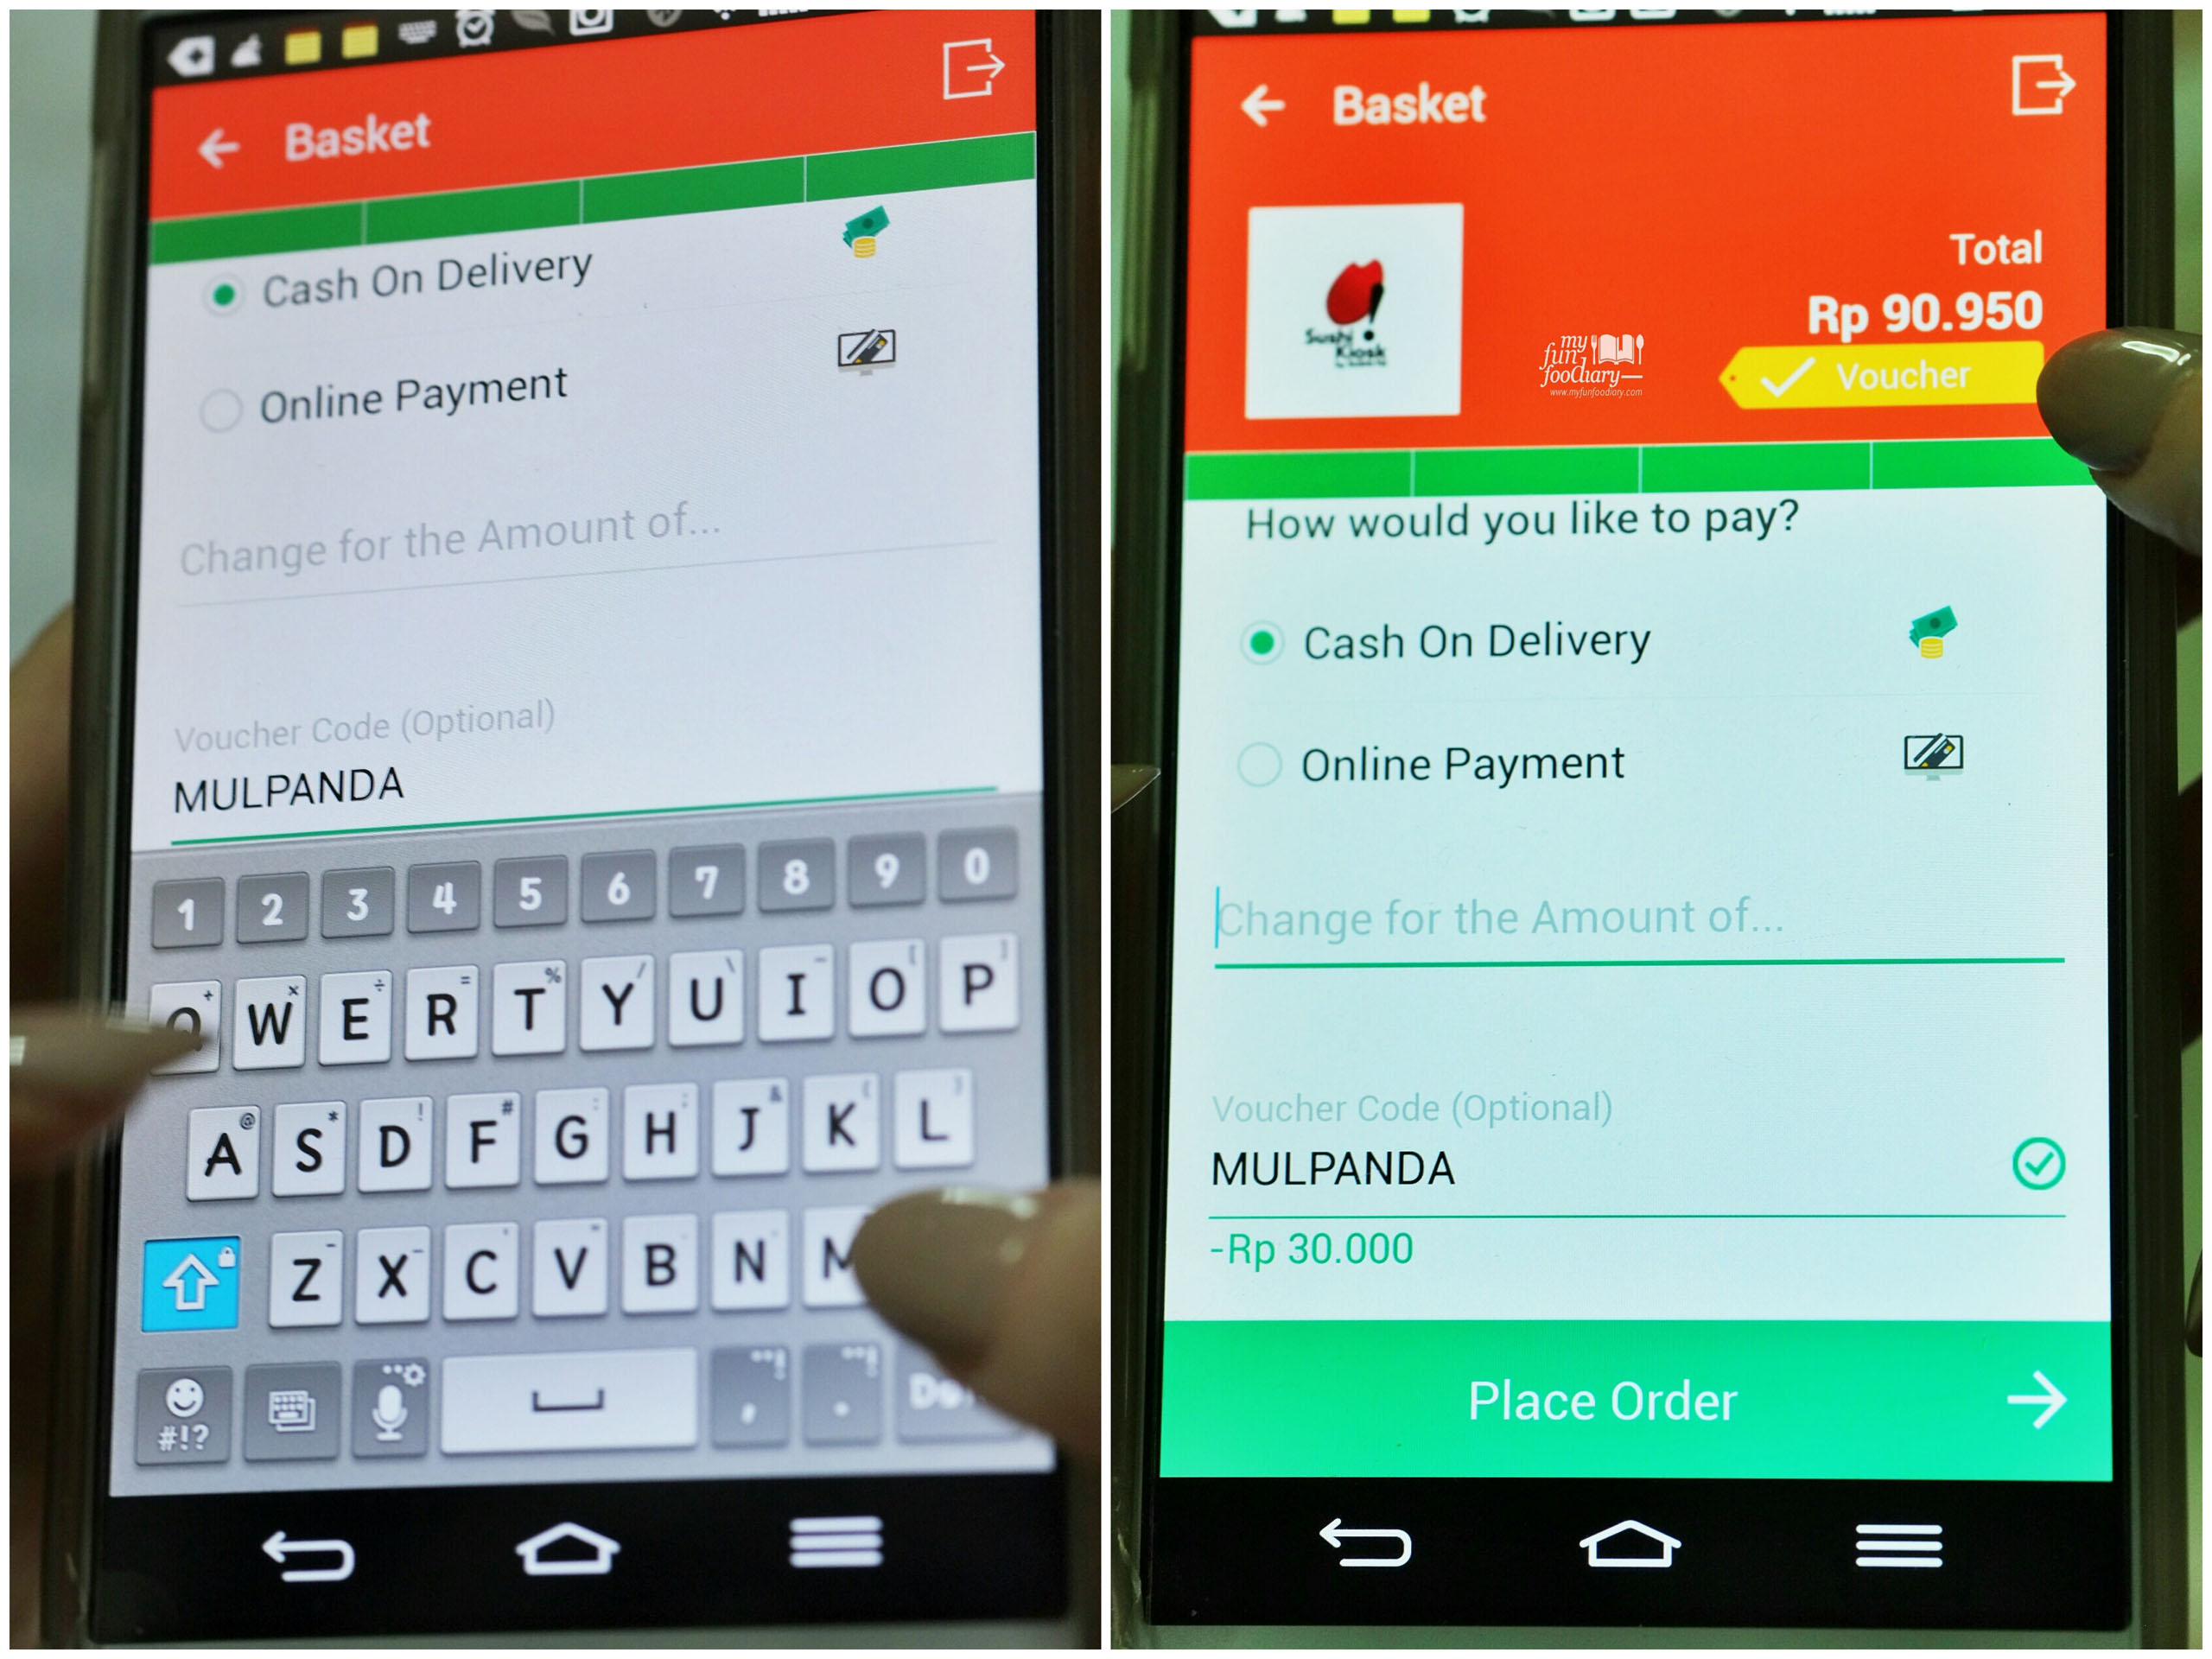 Enter Voucher Code MULPANDA to get discount in foodpanda apps by Myfunfoodiary